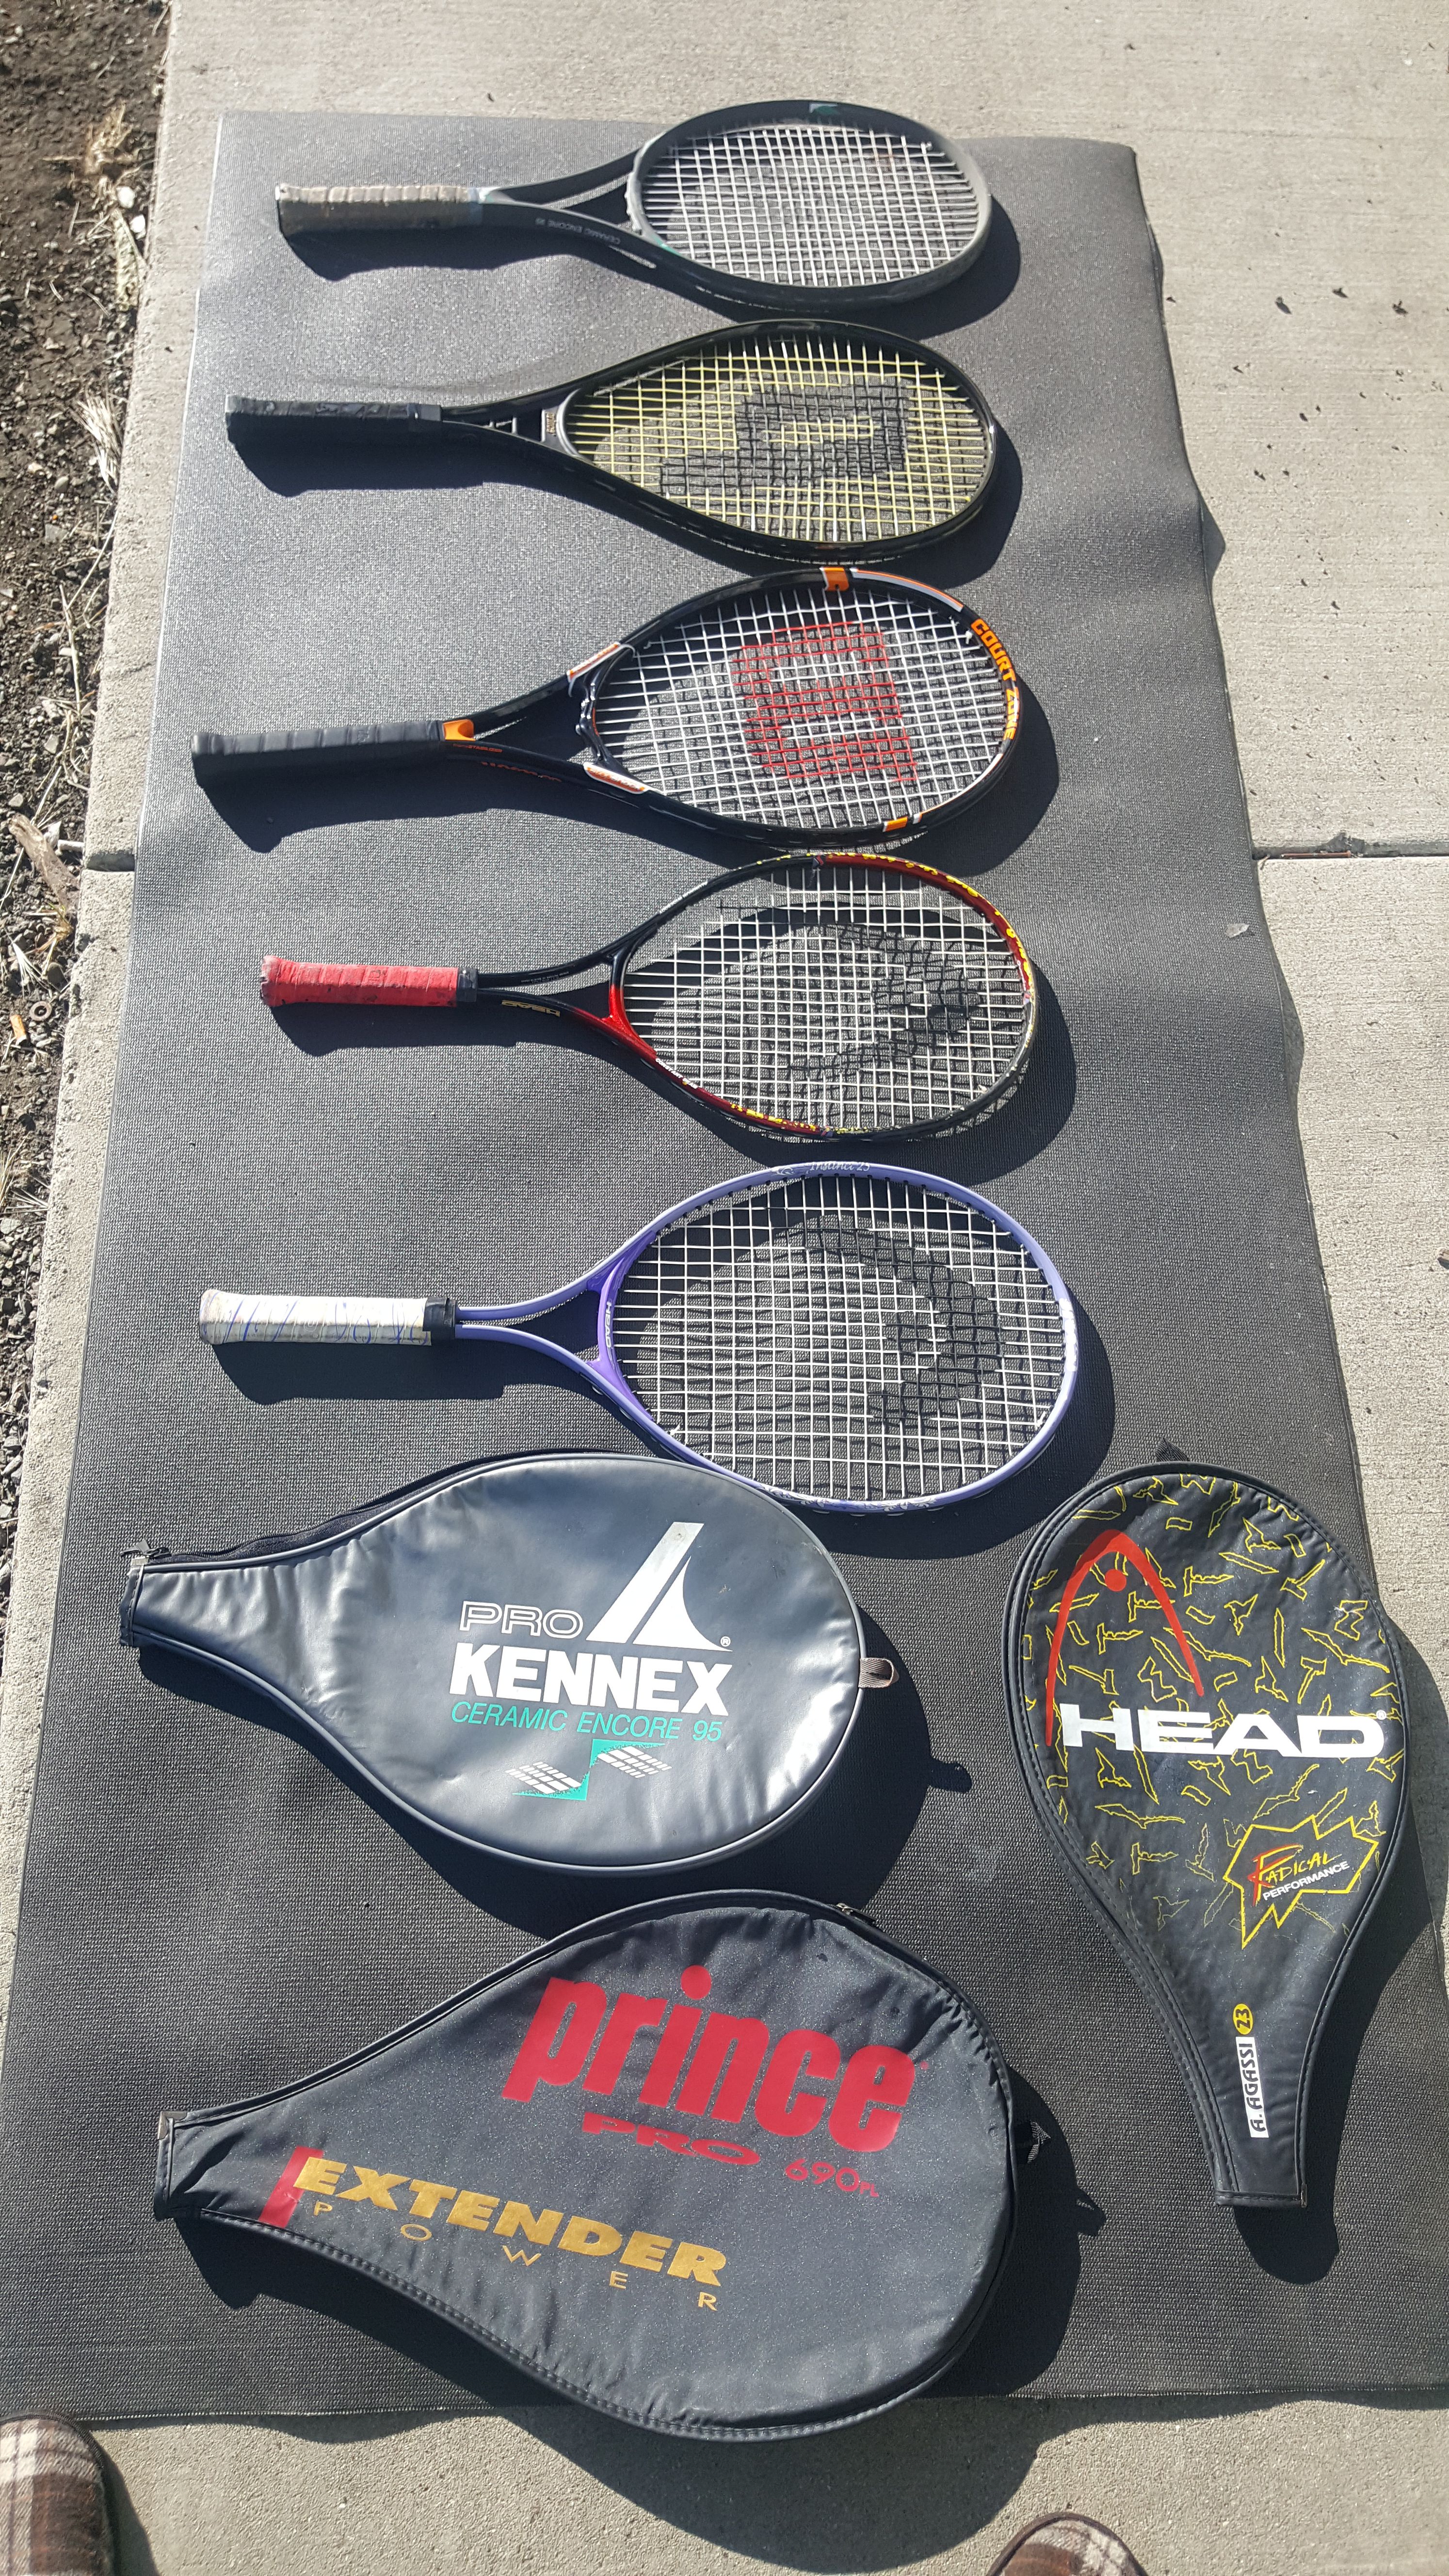 Great Tennis Rackets